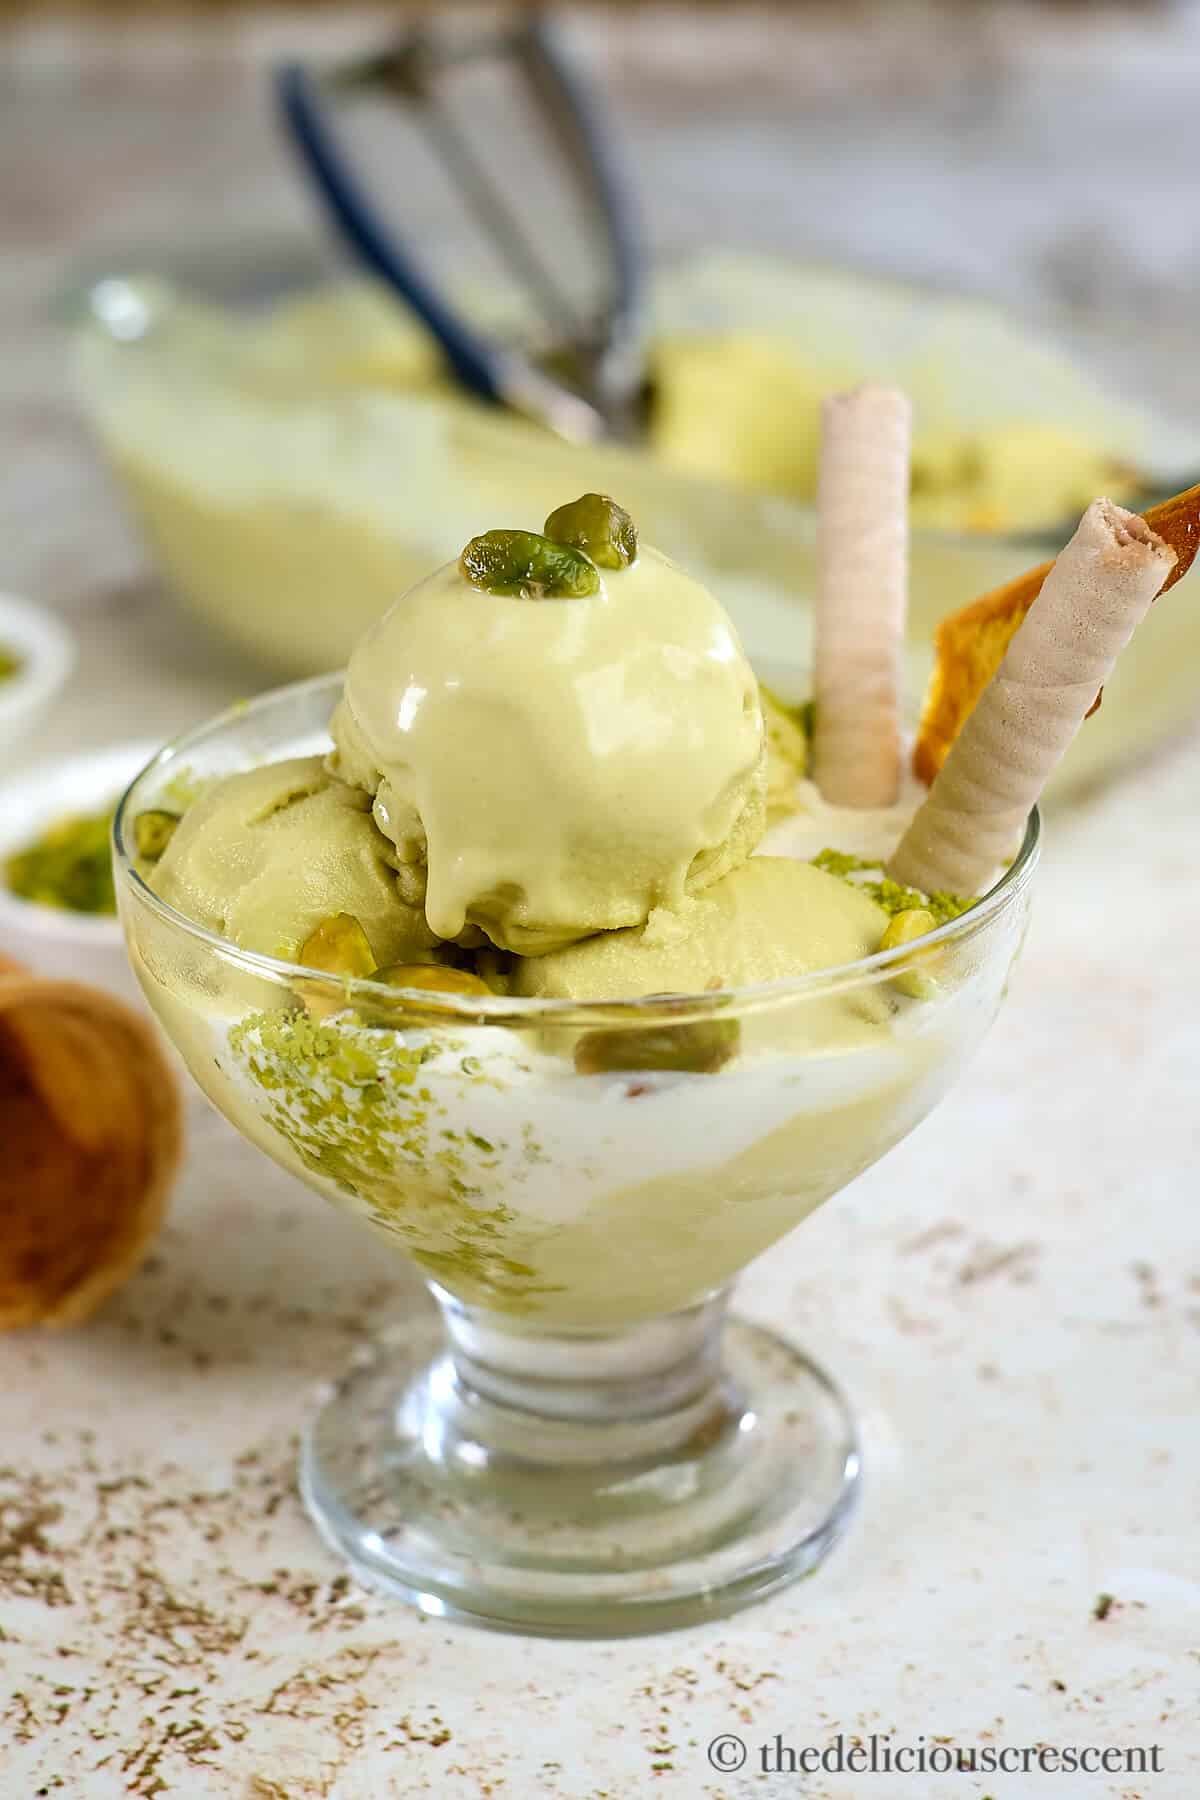 Creamy pistachio gelato served in a glass cup.